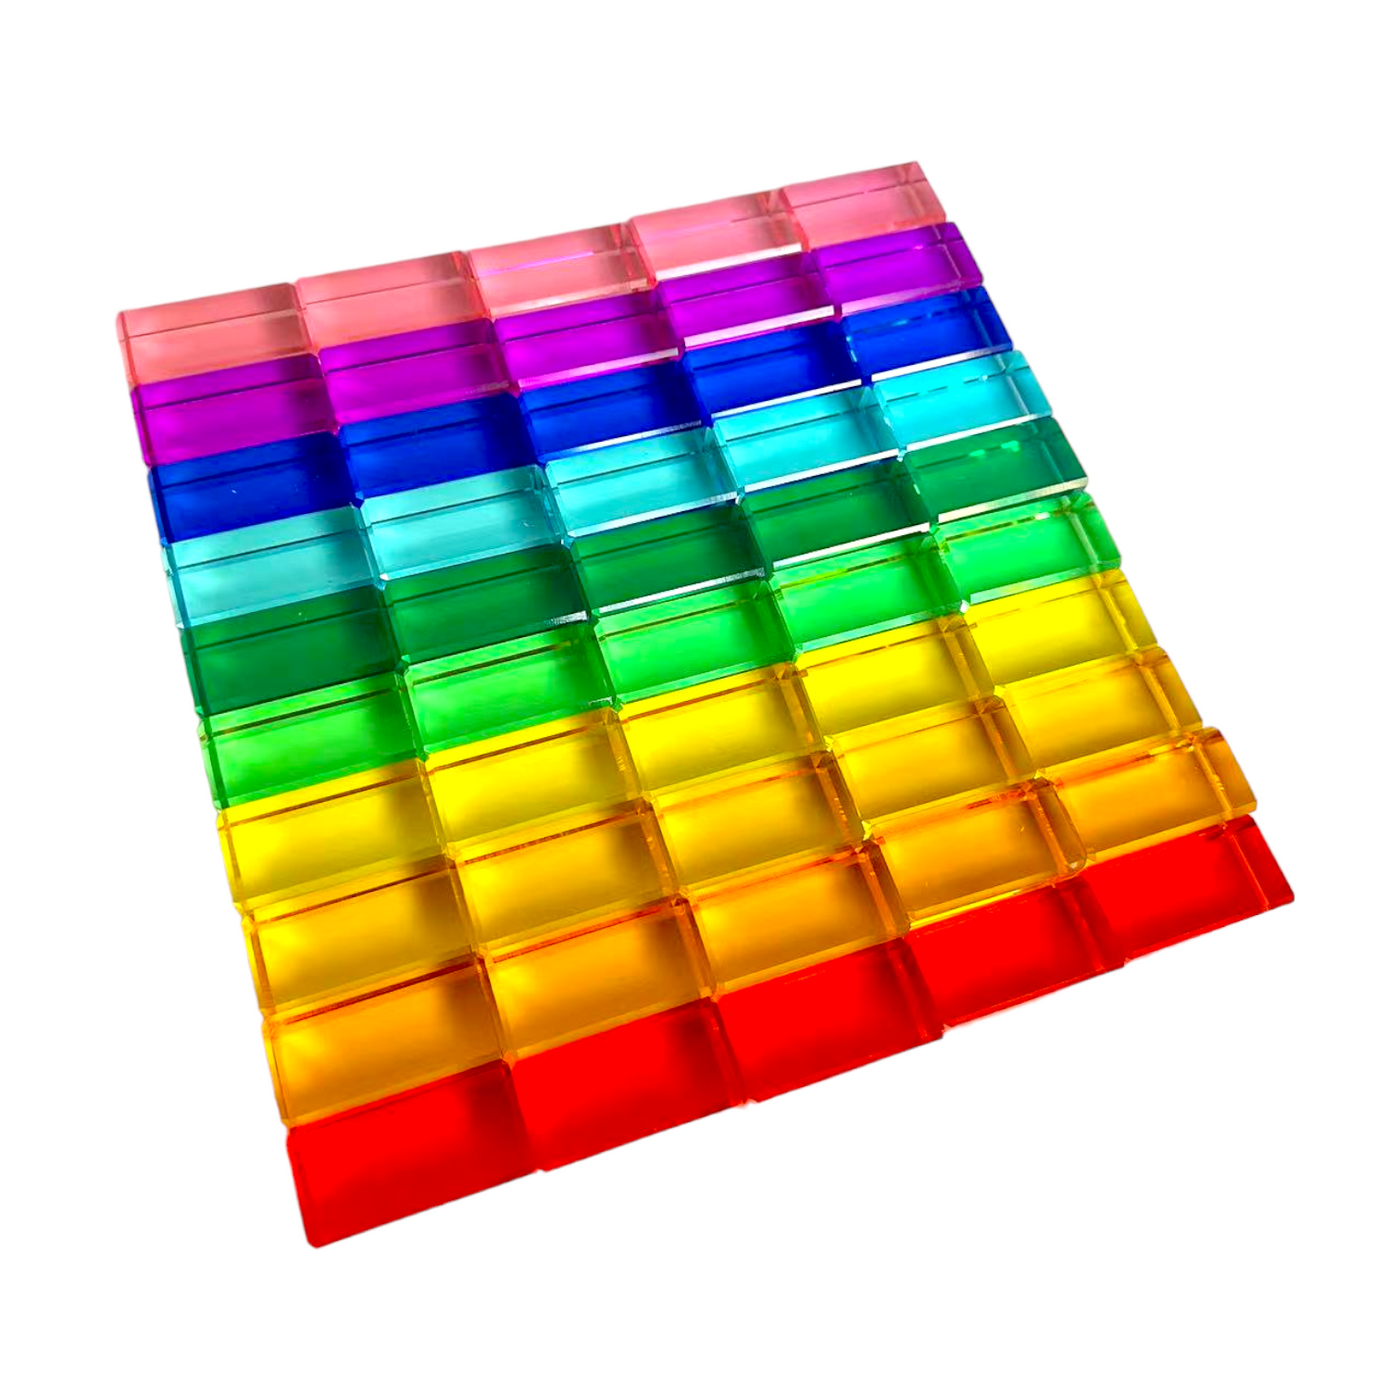 100 Pcs Acrylic Gem Cubes Blocks Translucent Rainbow Building